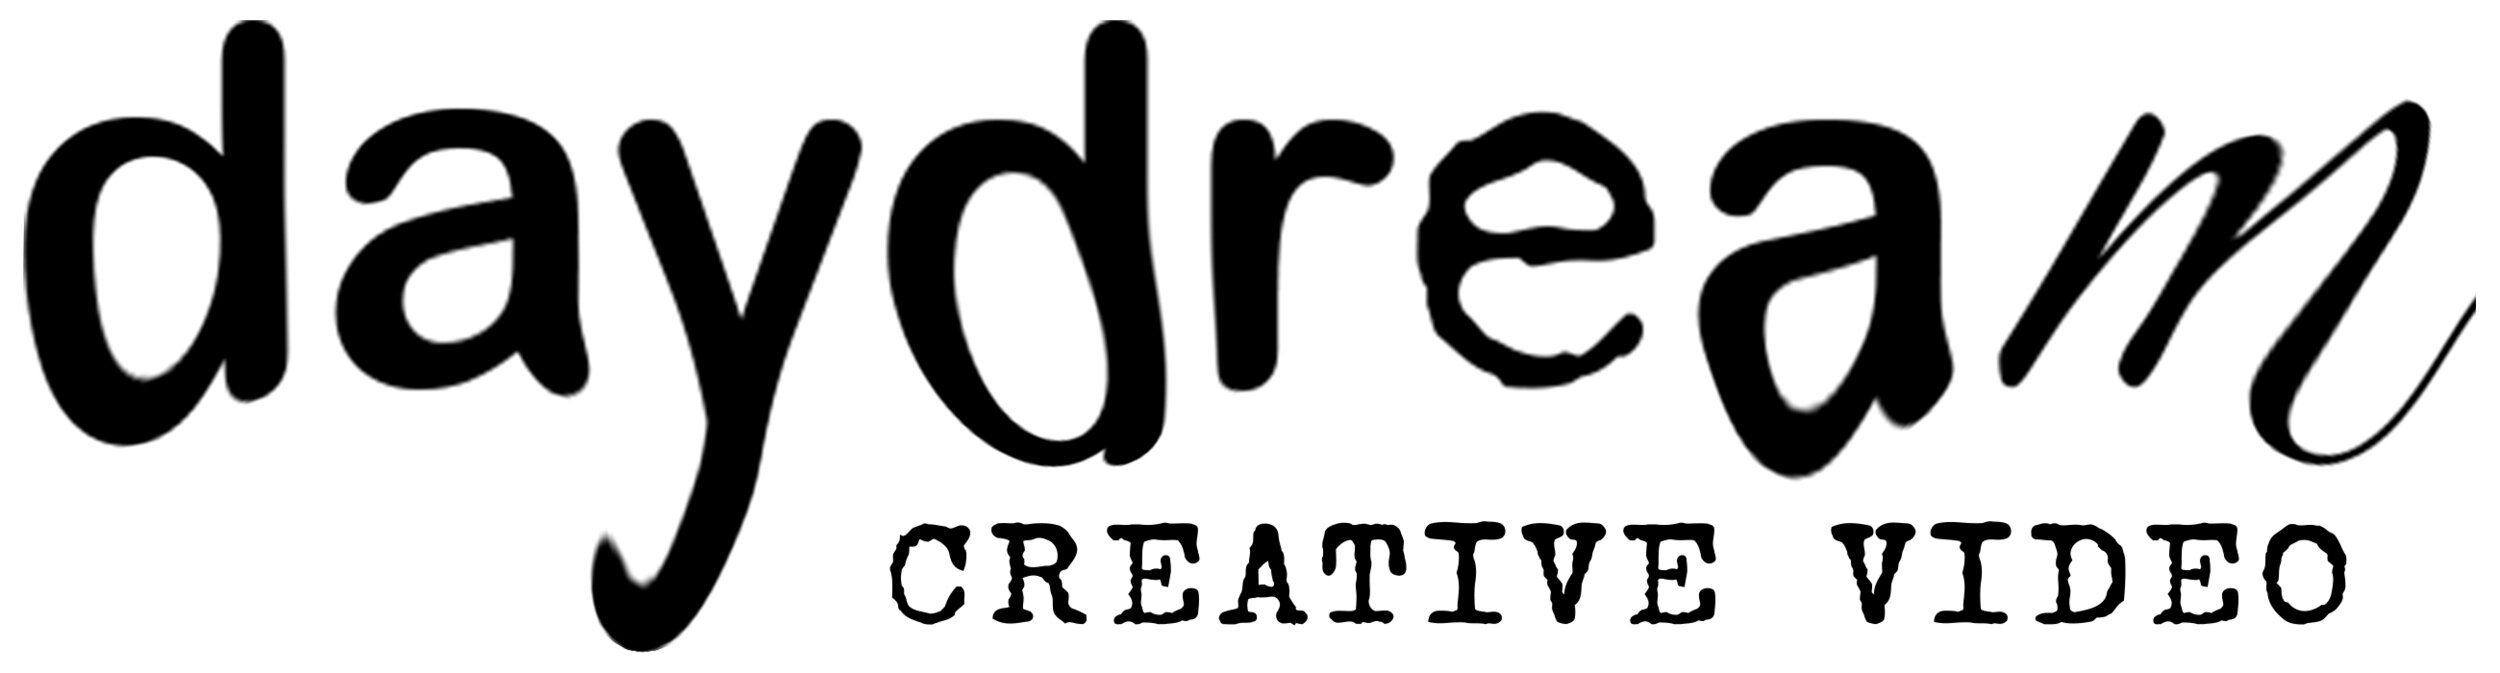 daydream creative video